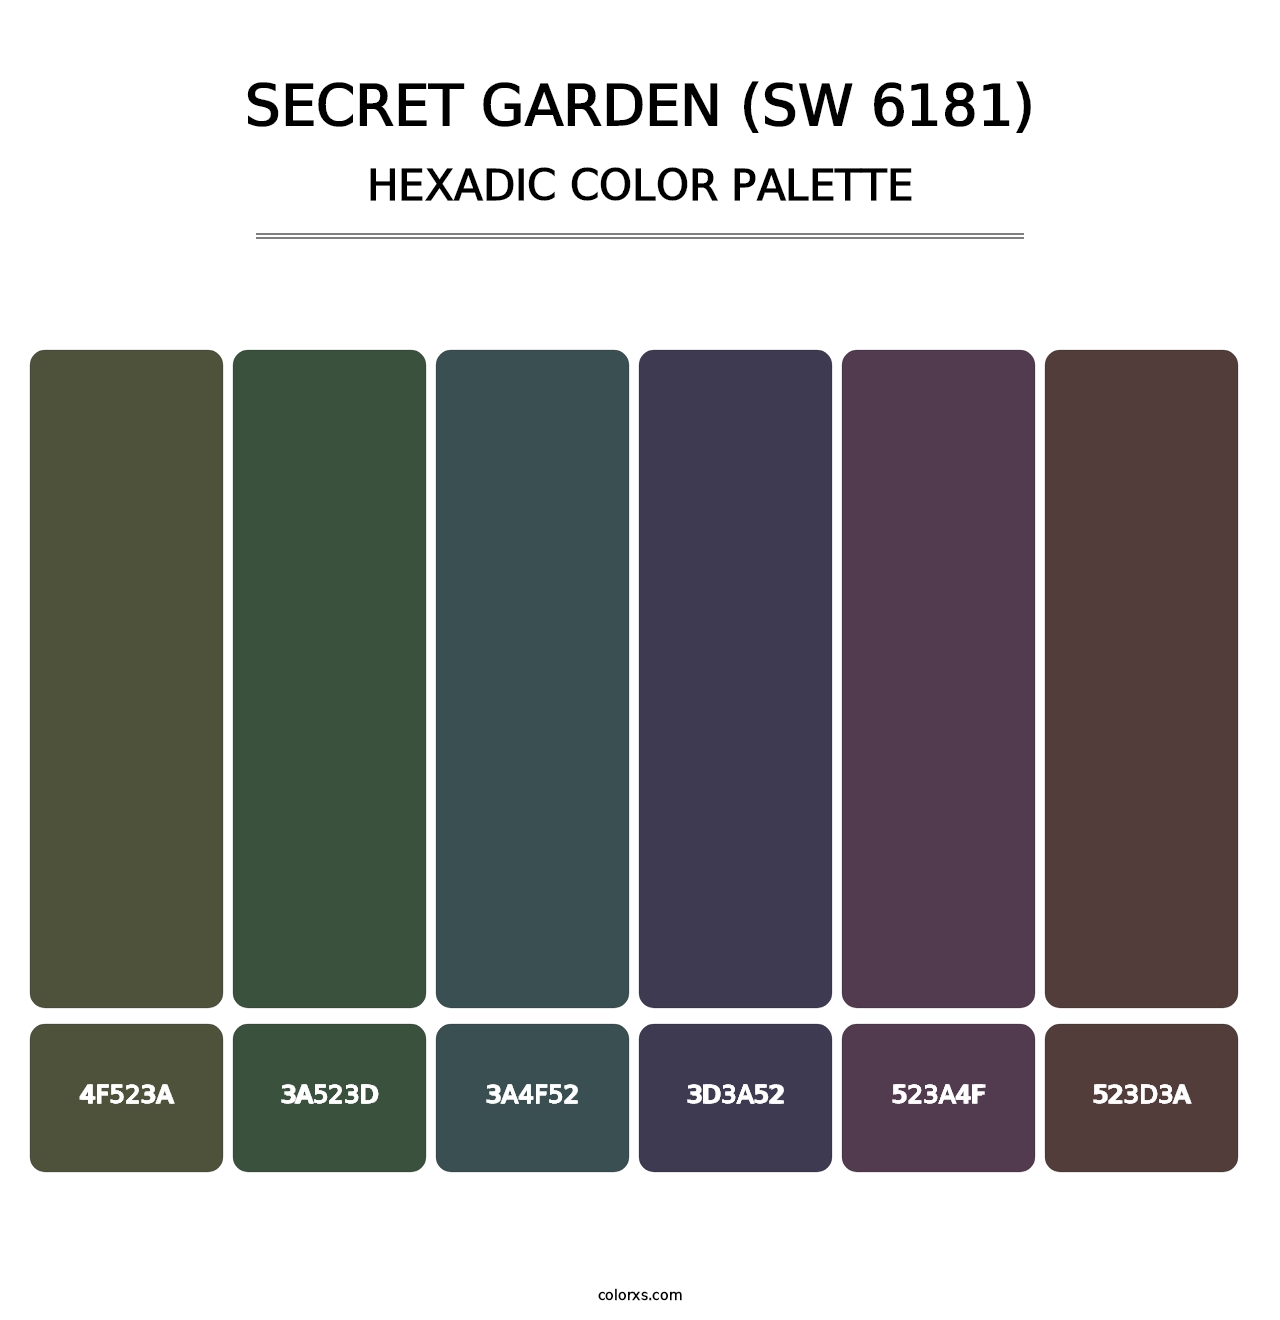 Secret Garden (SW 6181) - Hexadic Color Palette